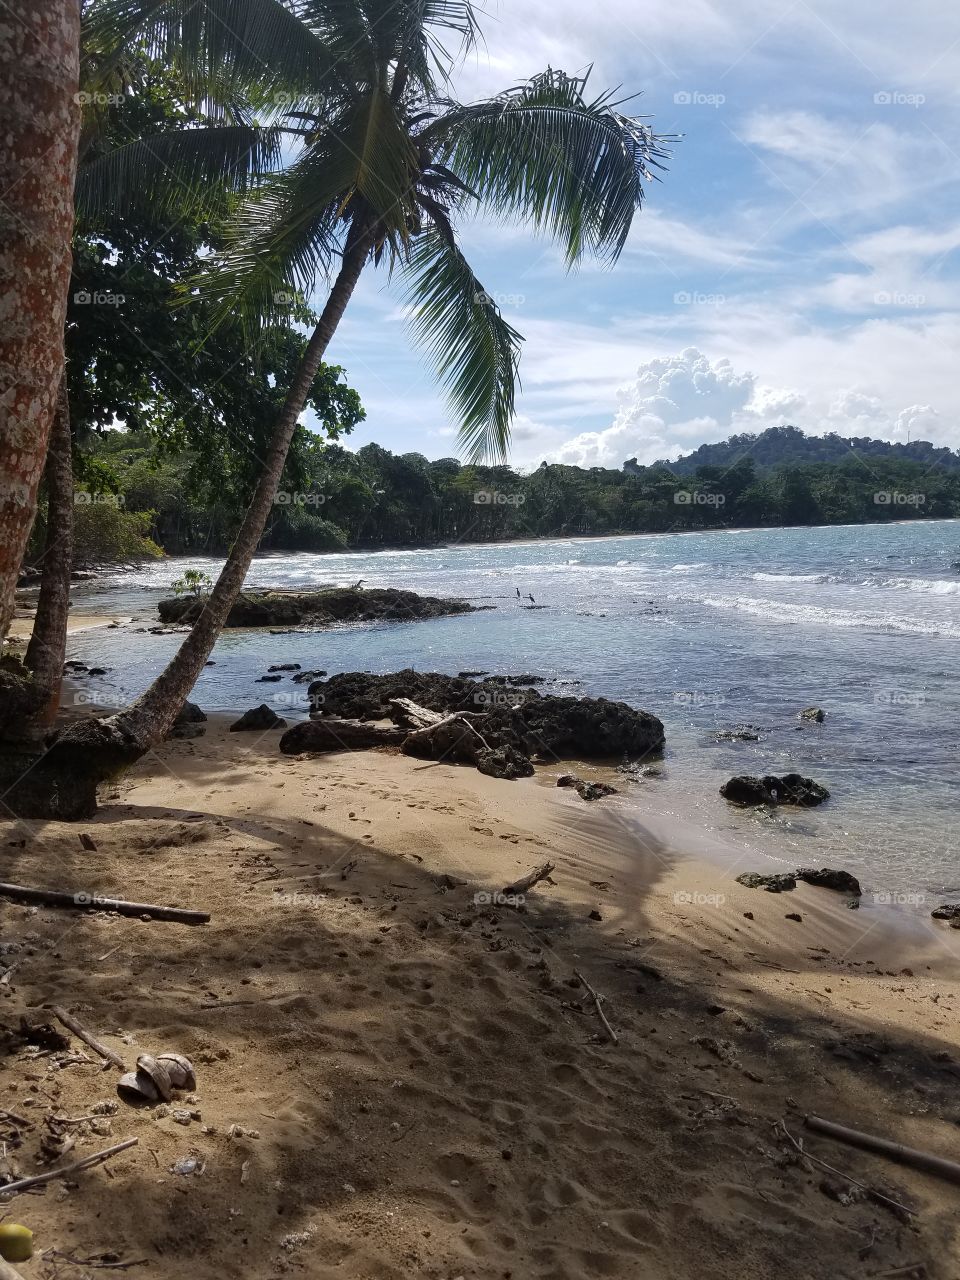 'SEASCAPE'
PUNTA UVA, COSTA RICA